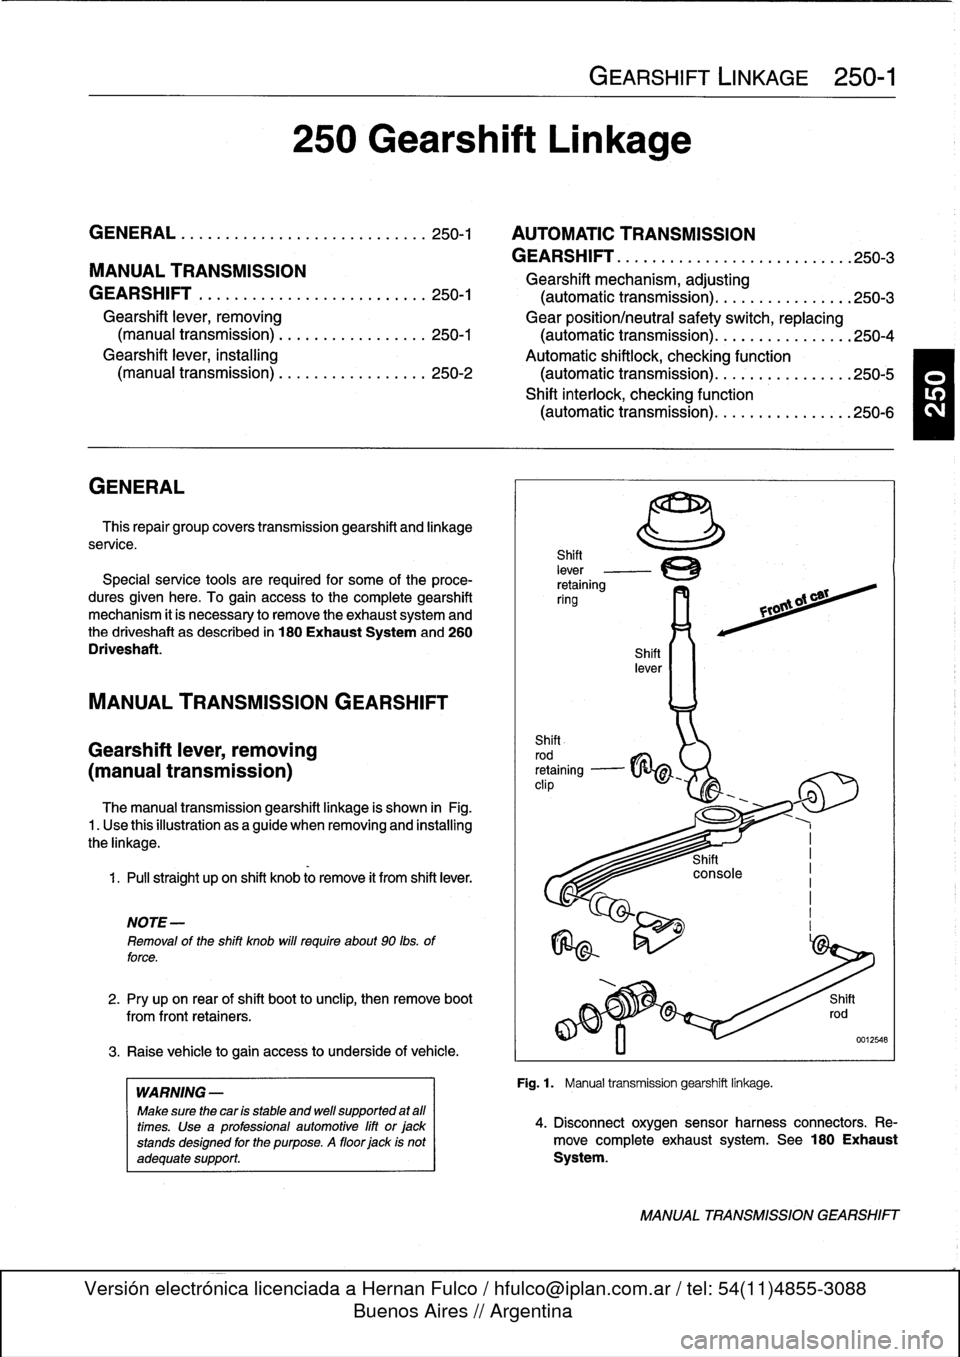 BMW 318i 1997 E36 Manual PDF 
GENERAL
.
.
.
.
.
.
.
.
.
................
.
.
.
250-1

	

AUTOMATIC
TRANSMISSION
GEARSHIFT
...
.
.........
.
.
.
.
.
.
.
.
.
.
.
.
.
.
250-3
MANUAL
TRANSMISSION

	

Gearshift
mechanism,
adjusting
GE